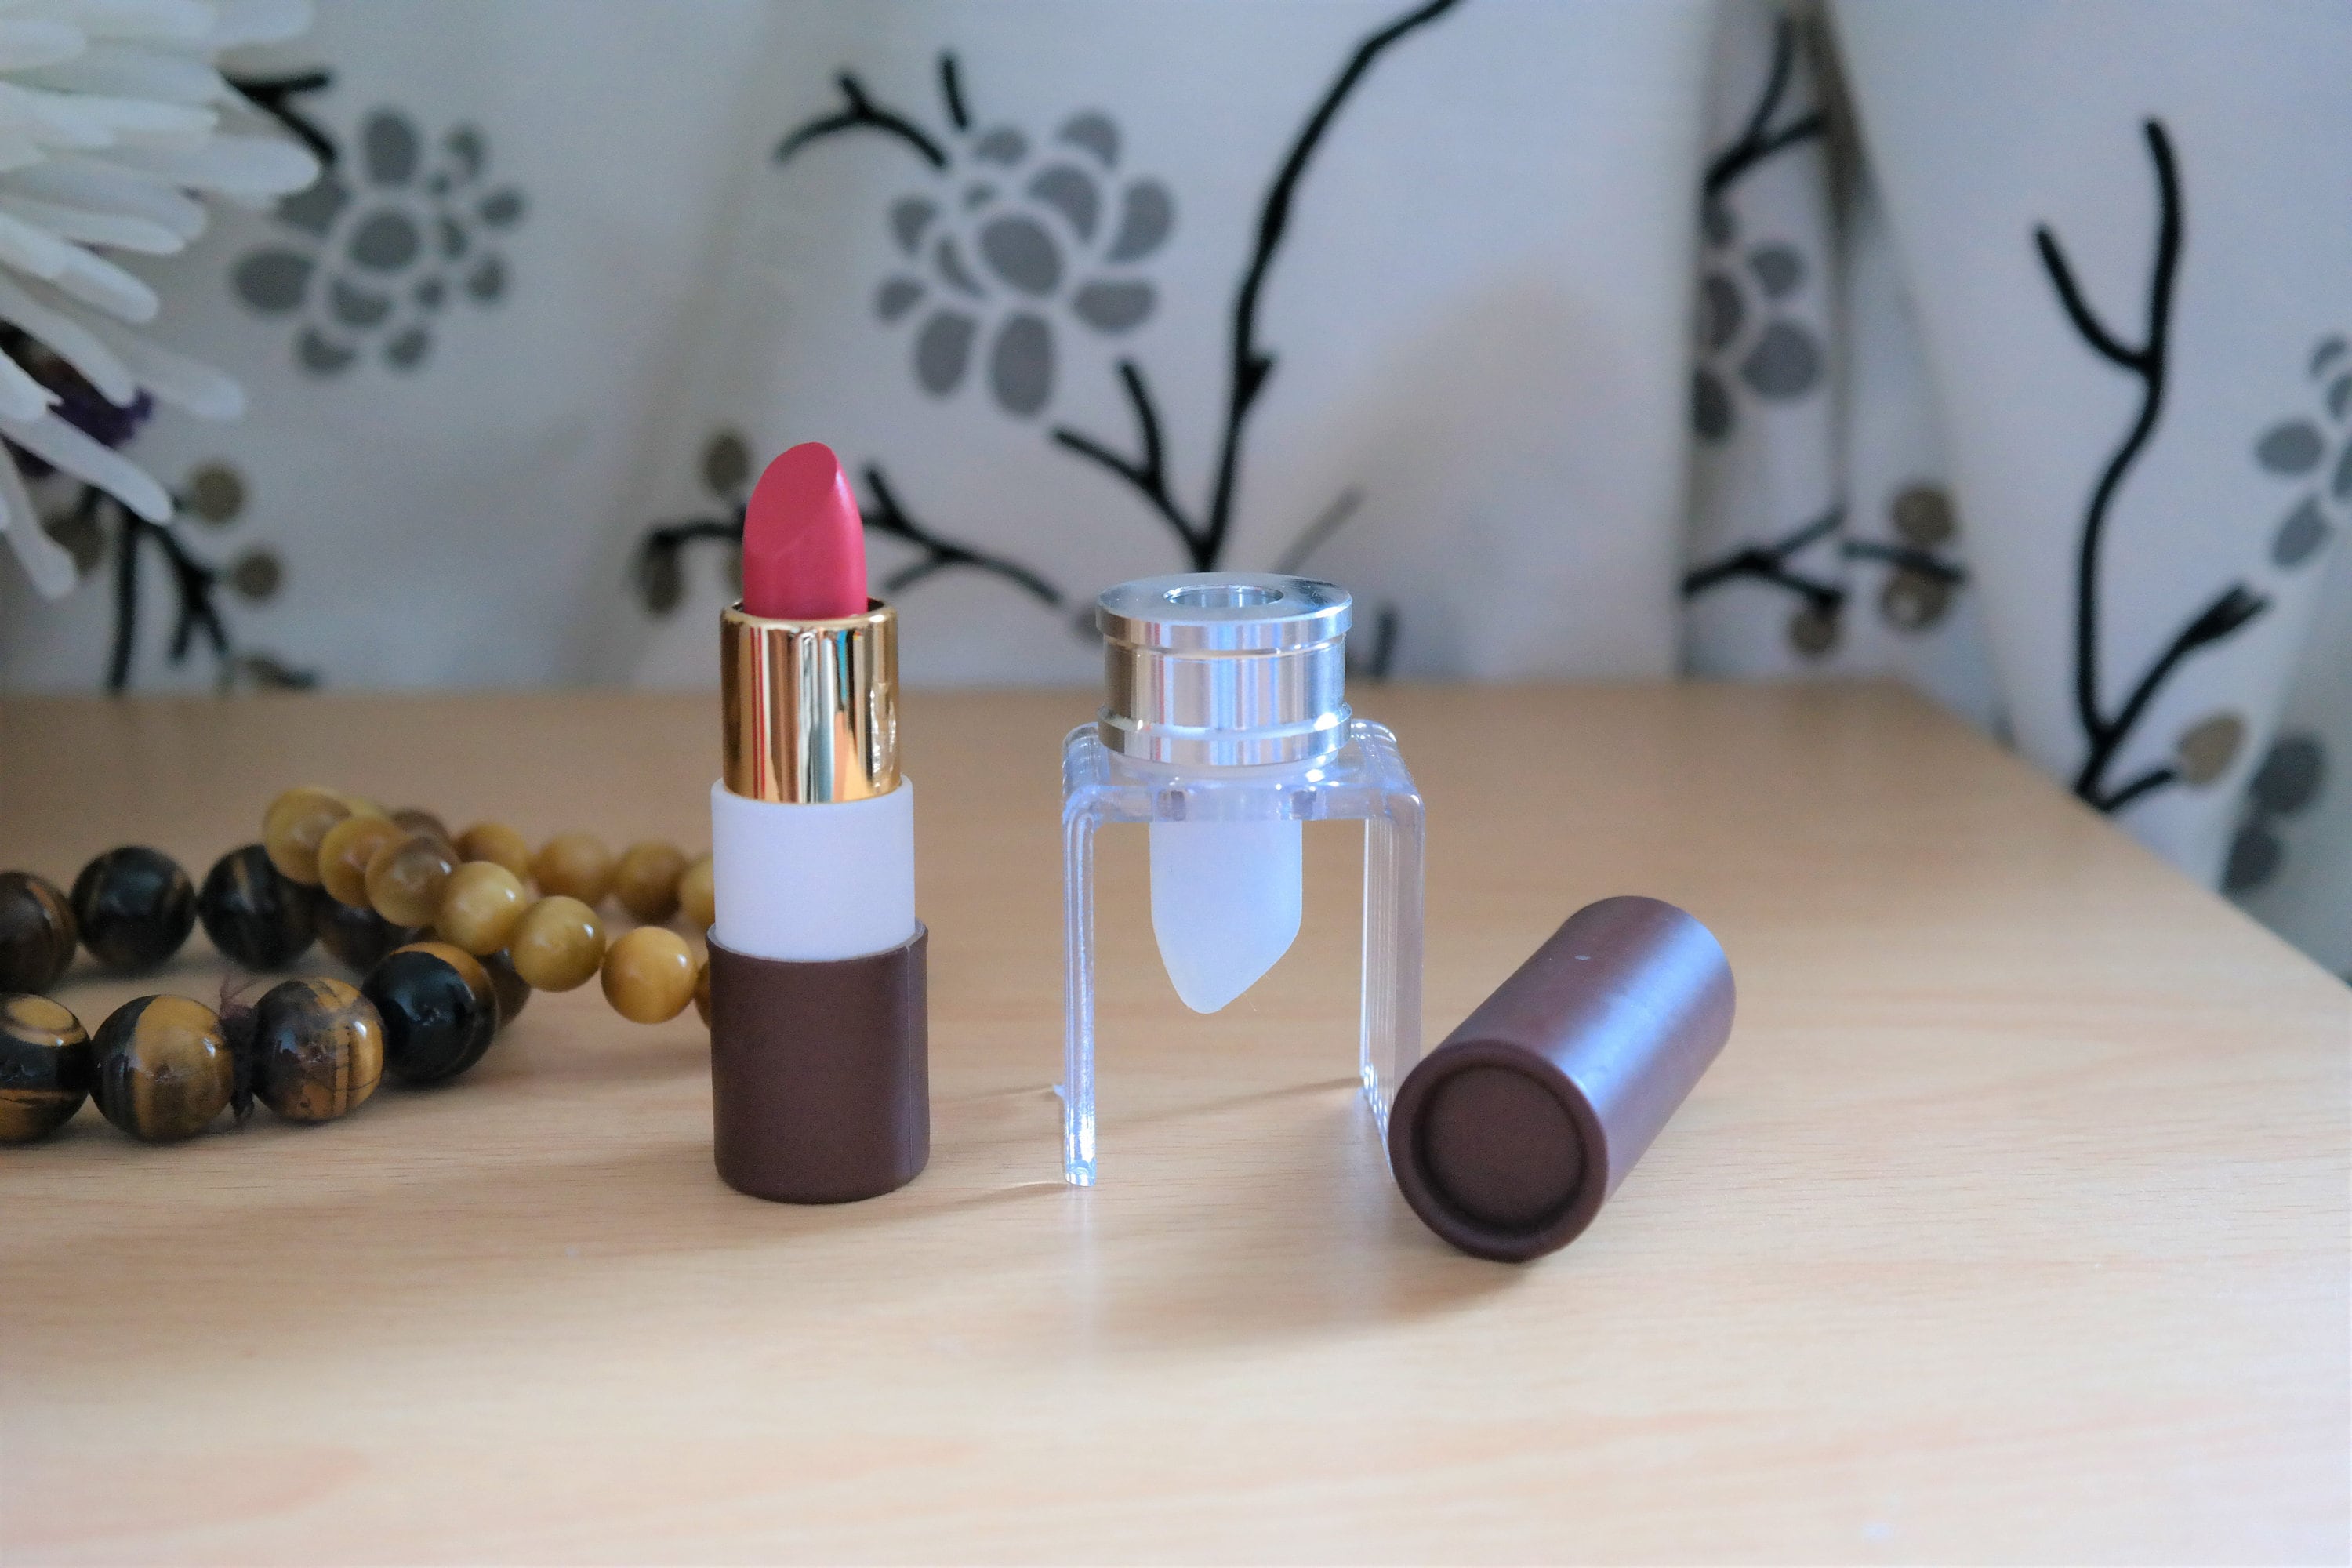  AHANDMAKER 16 Style Lipstick Mold Silicone DIY Makeup Cosmetics  Lipstick Mould for DIY Lipstick Lip Cream Making Lipstick Fix : Beauty &  Personal Care